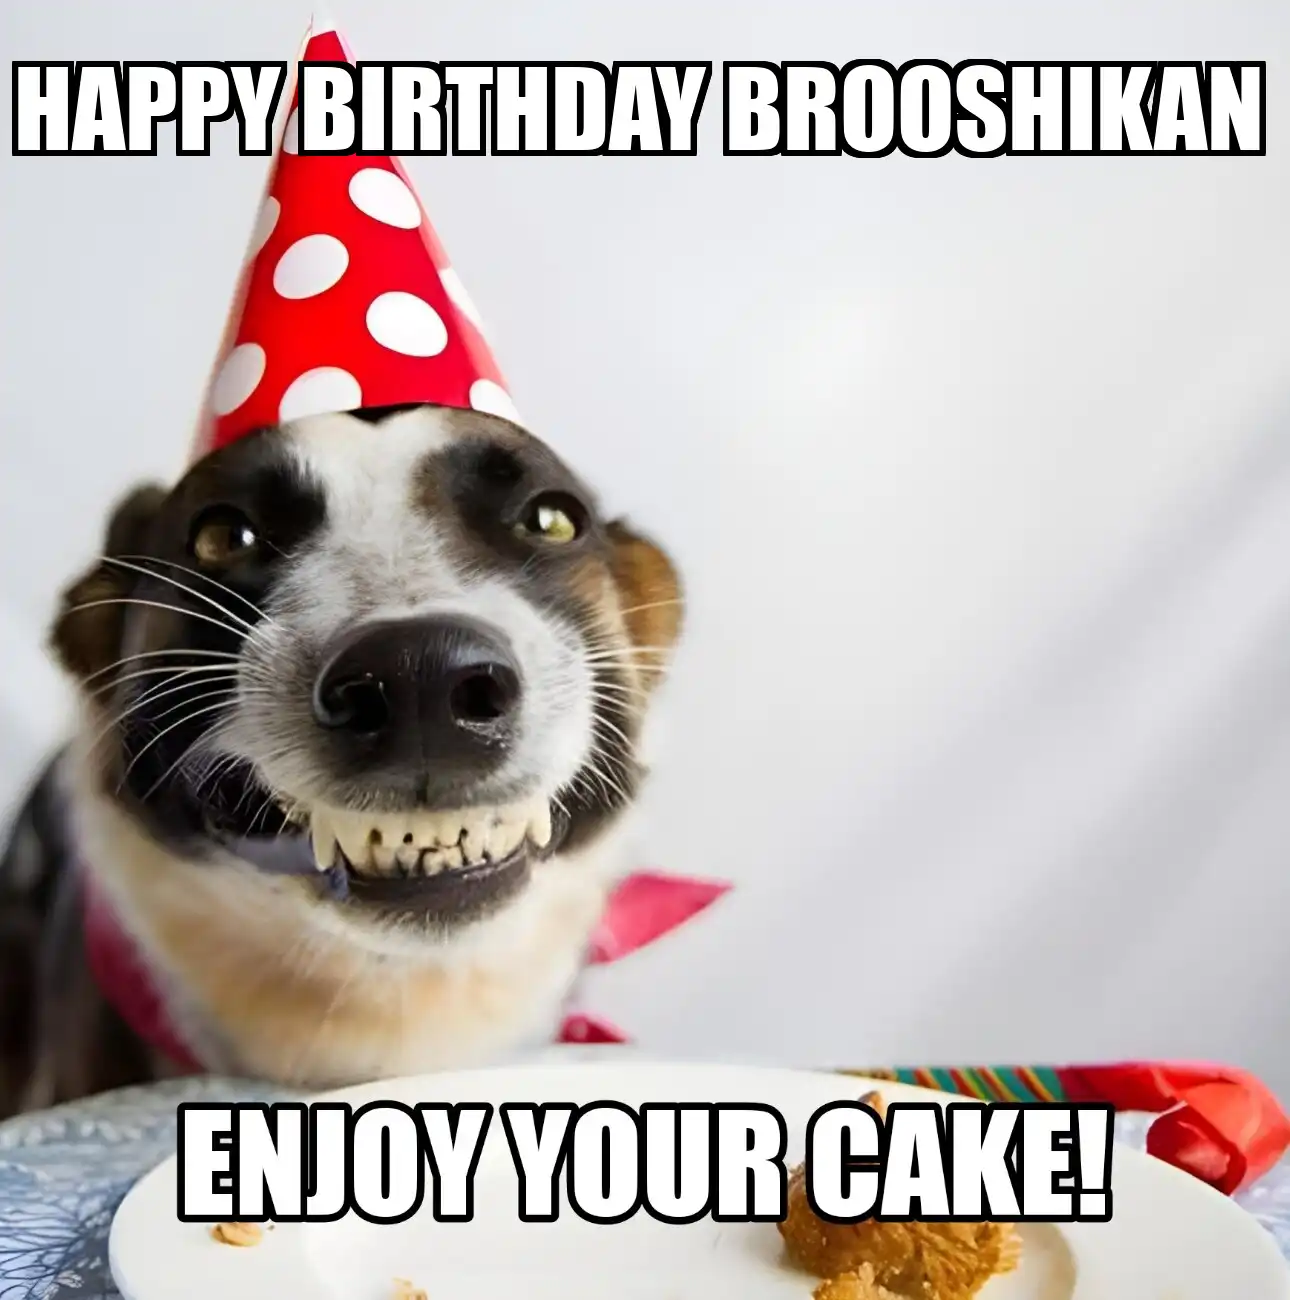 Happy Birthday Brooshikan Enjoy Your Cake Dog Meme